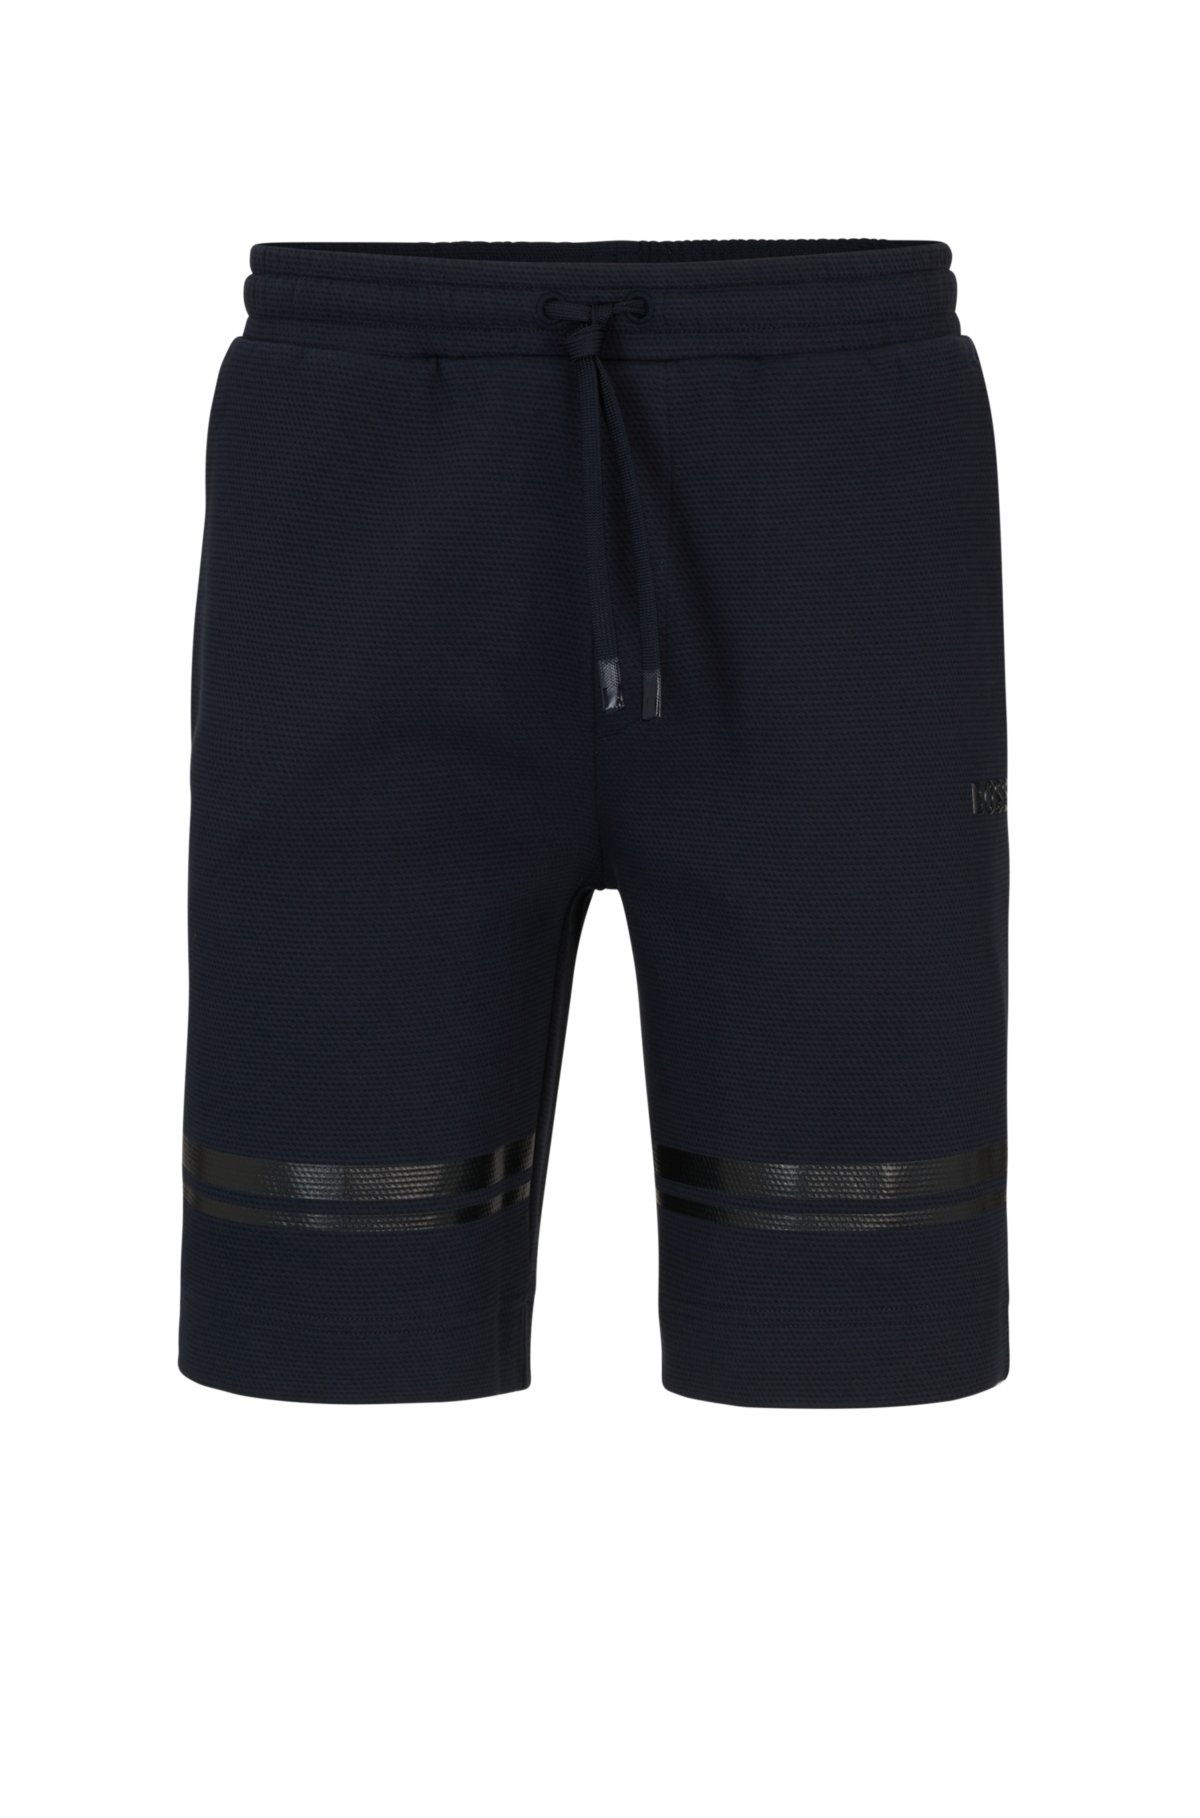 Hugo Boss Athleisure Headlo 2 Sweat Shorts in Black